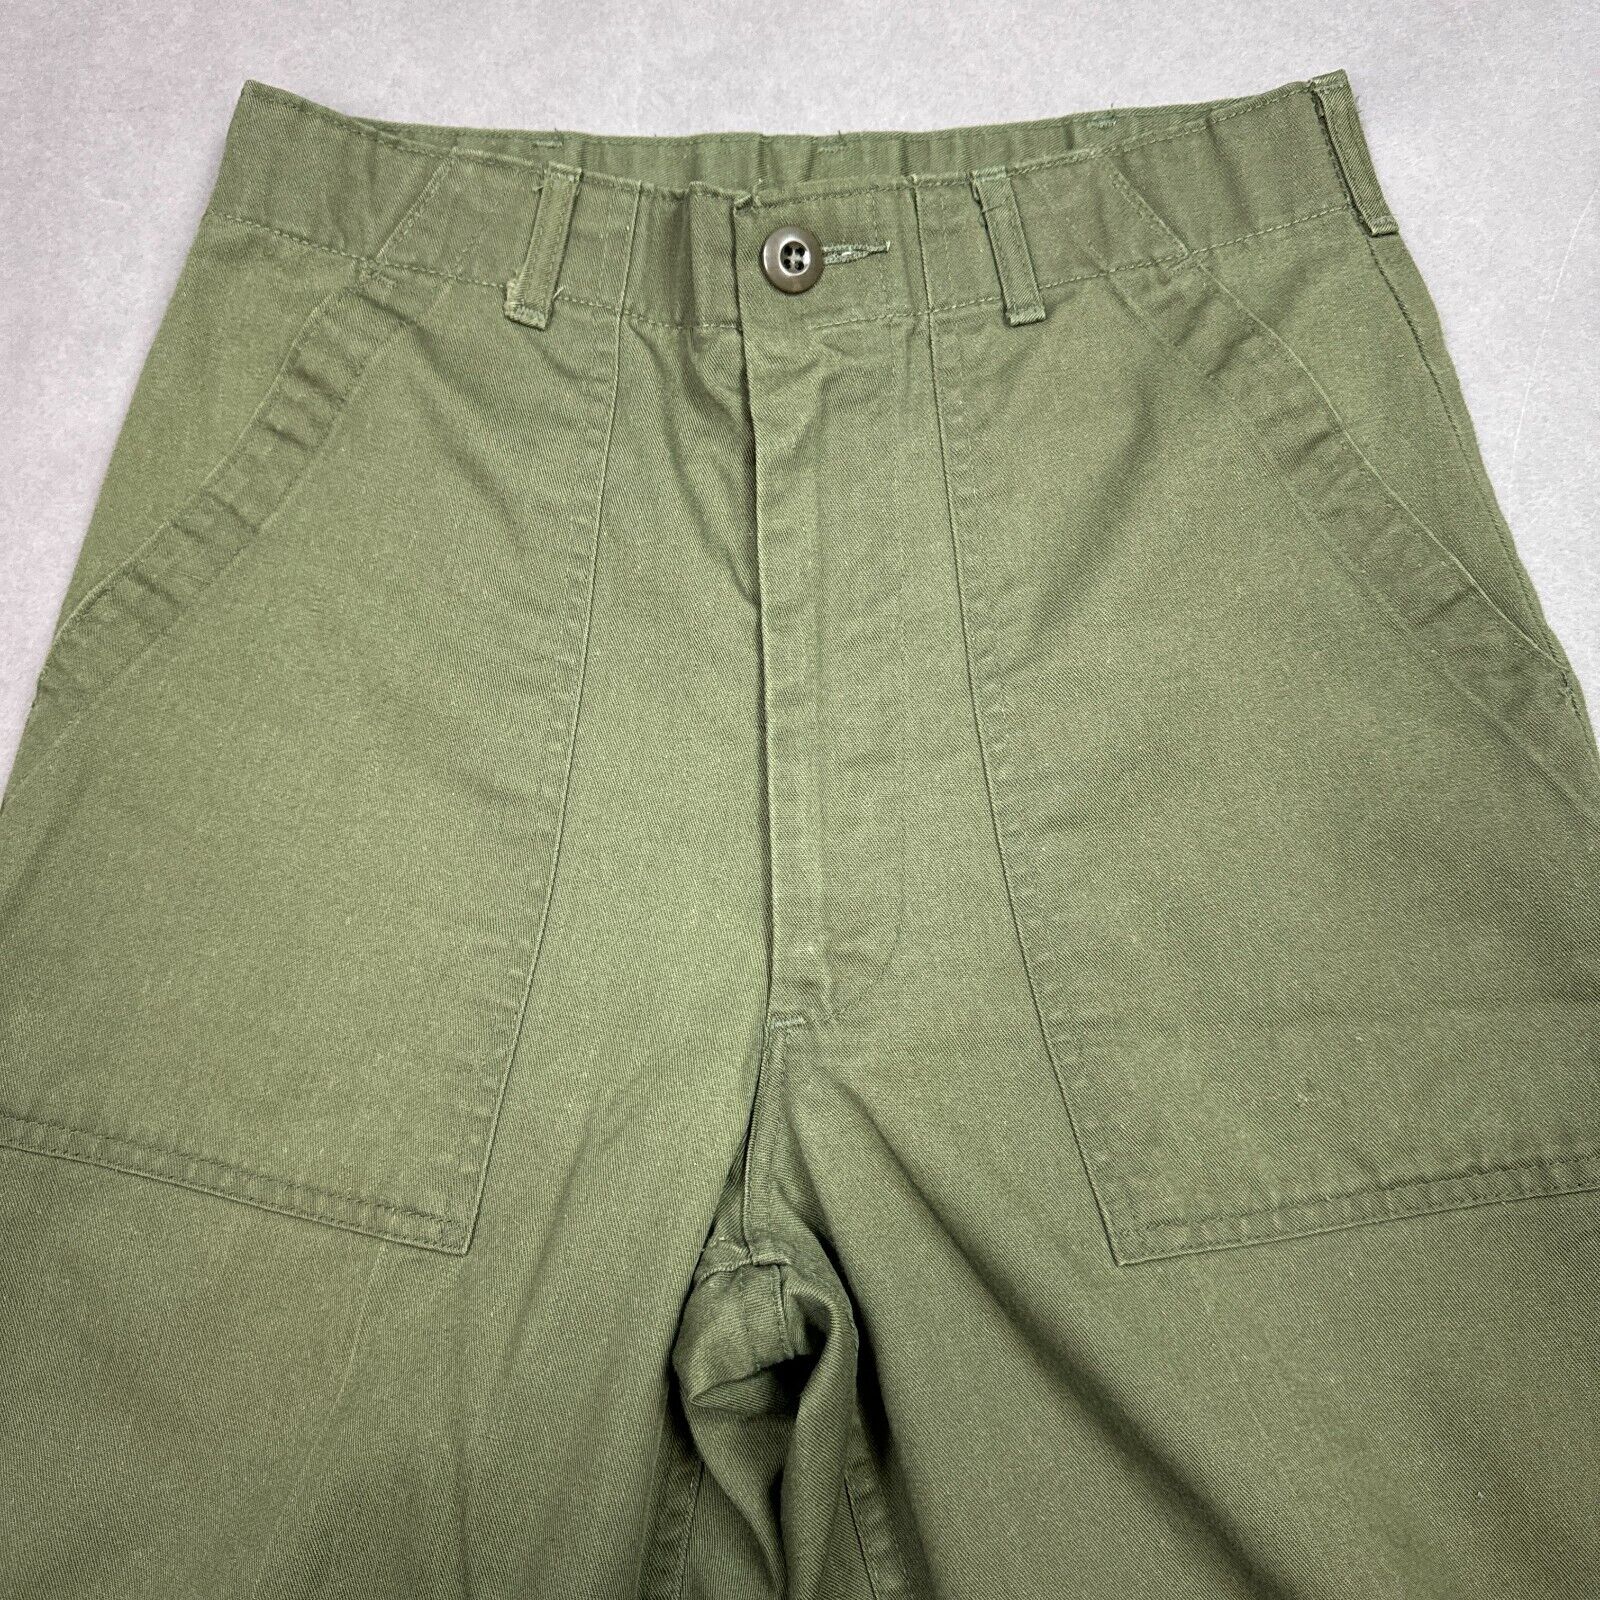 Vintage US Military Pants Mens 30x34 Green Vietnam War Era Trouser Cargo Combat